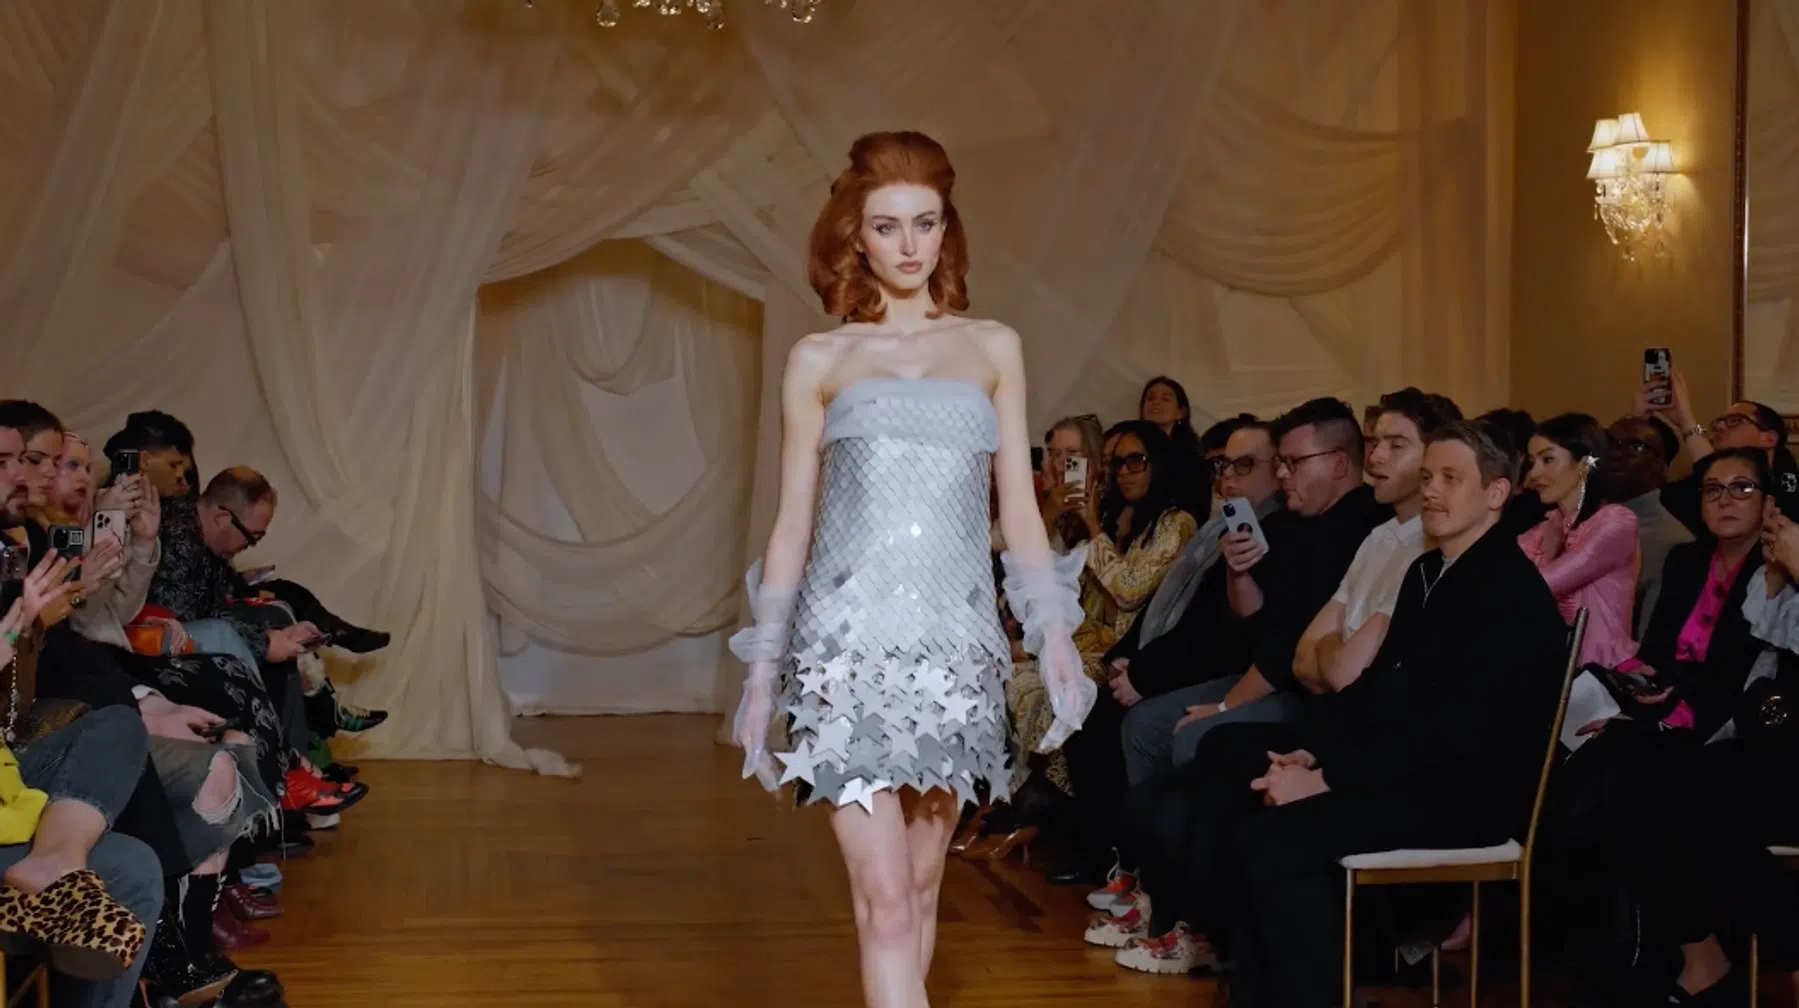 Interactieve jurk van Adobe schittert op catwalk: geen Photoshop nodig